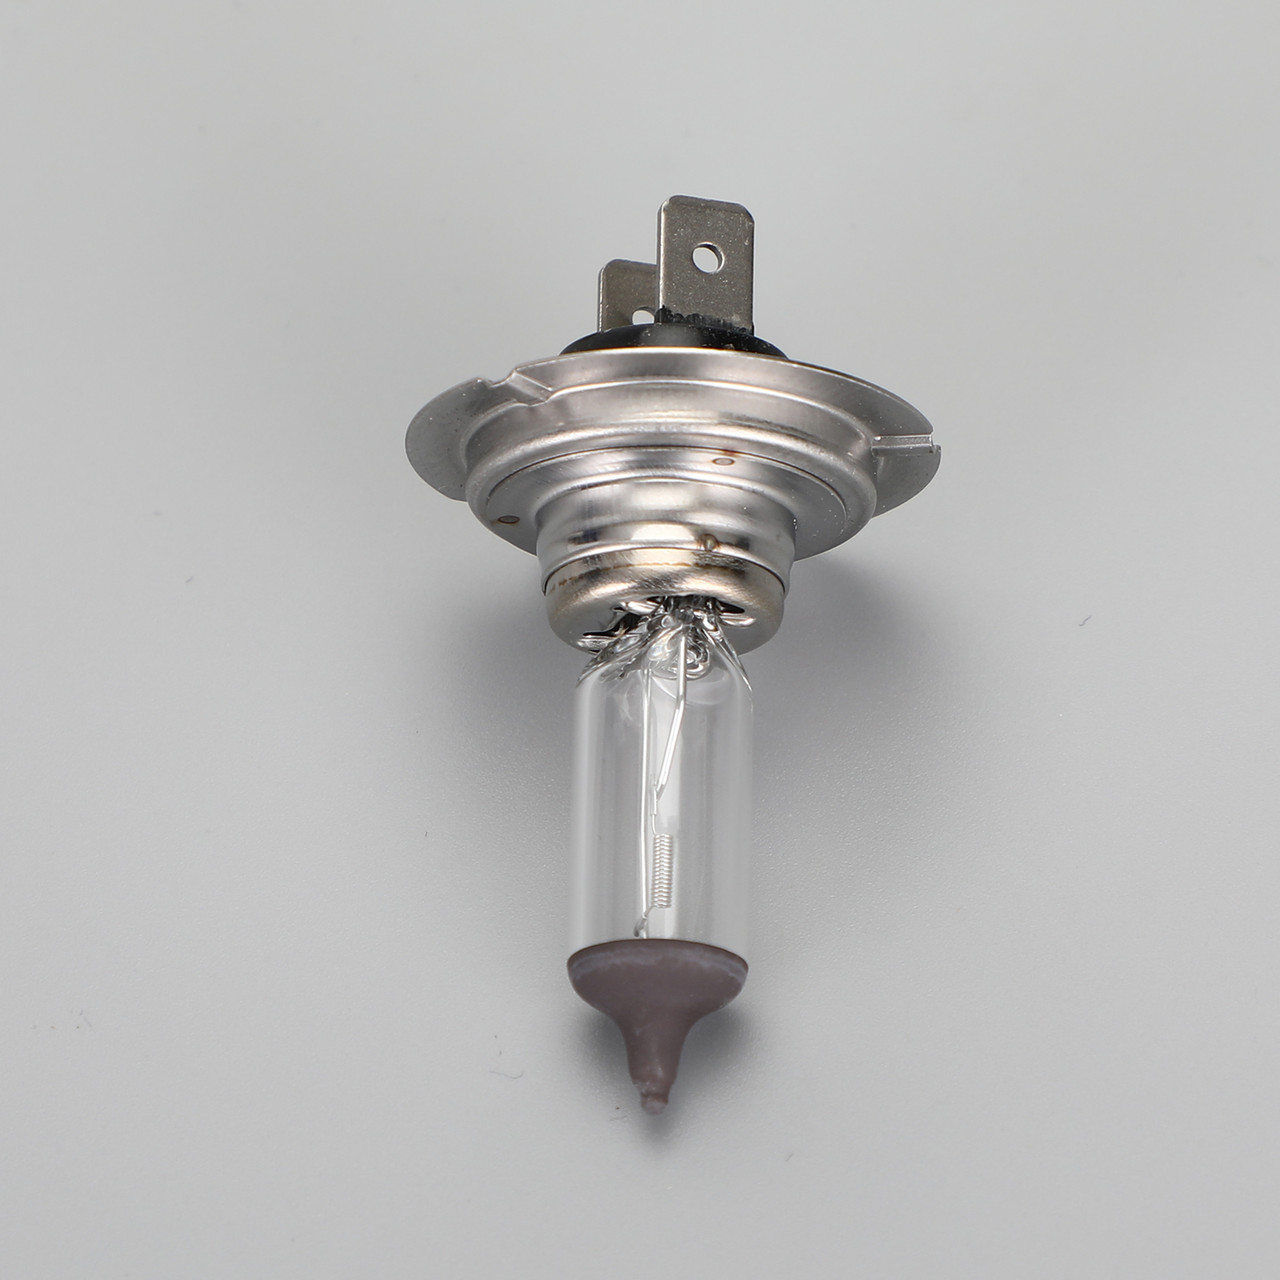 1 pcs For Vosla H7 Bulb 12V 80W Light Auxiliary Lamp 28358 PX26d